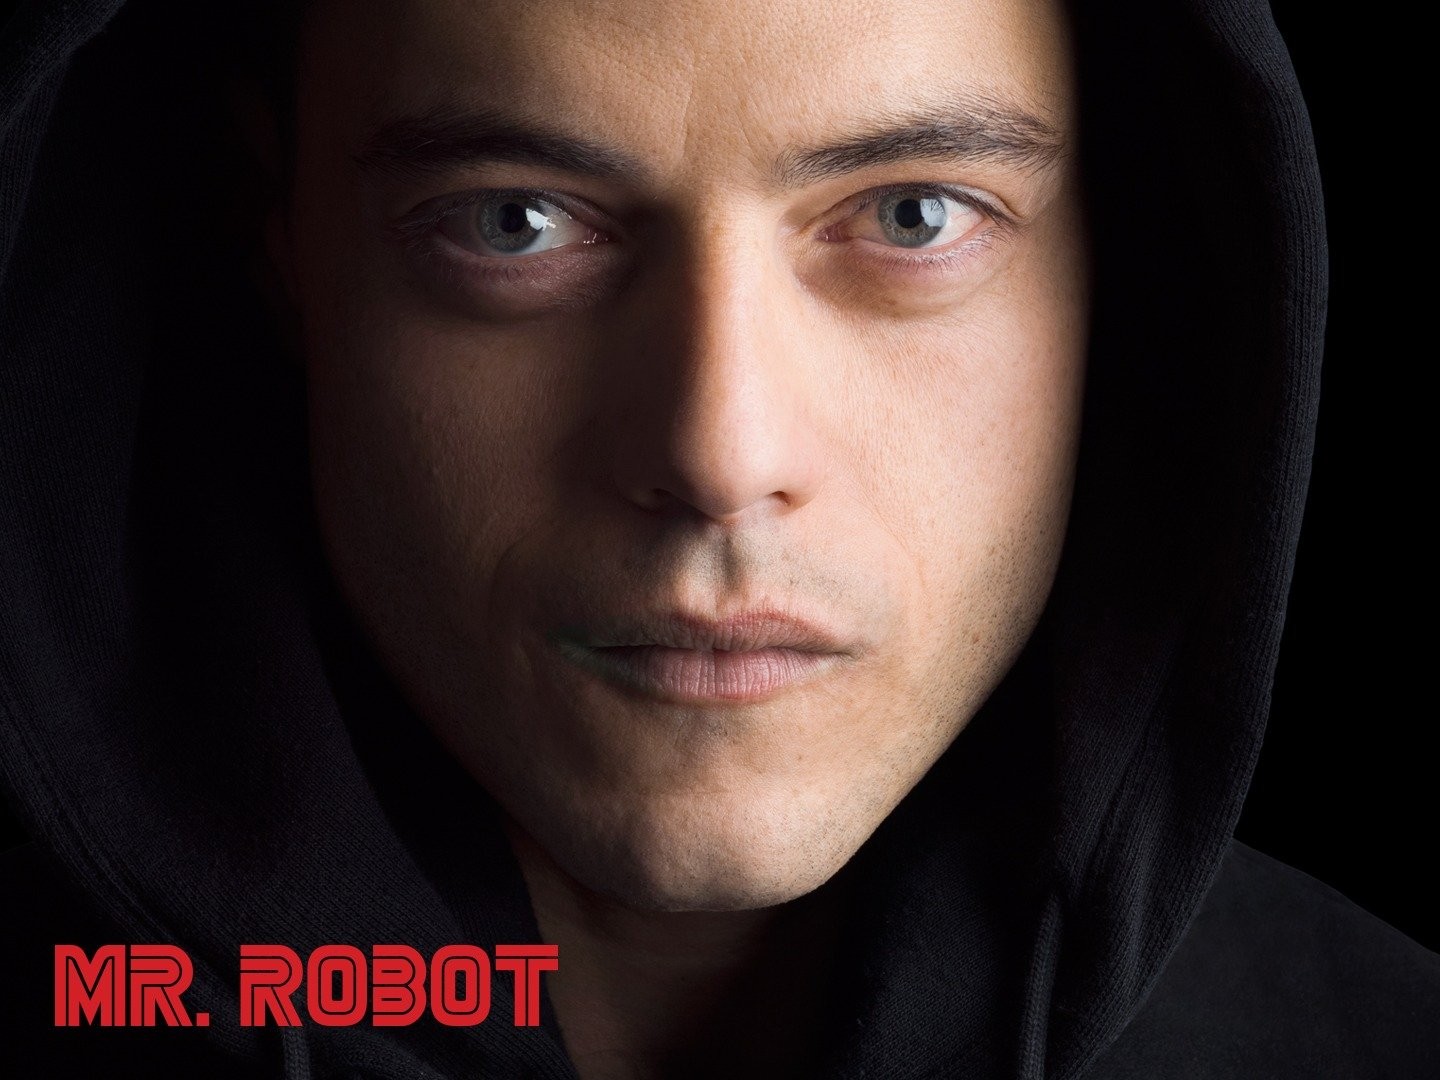 Mr. Robot: Season 1 Cast Interview - Rami Malek 